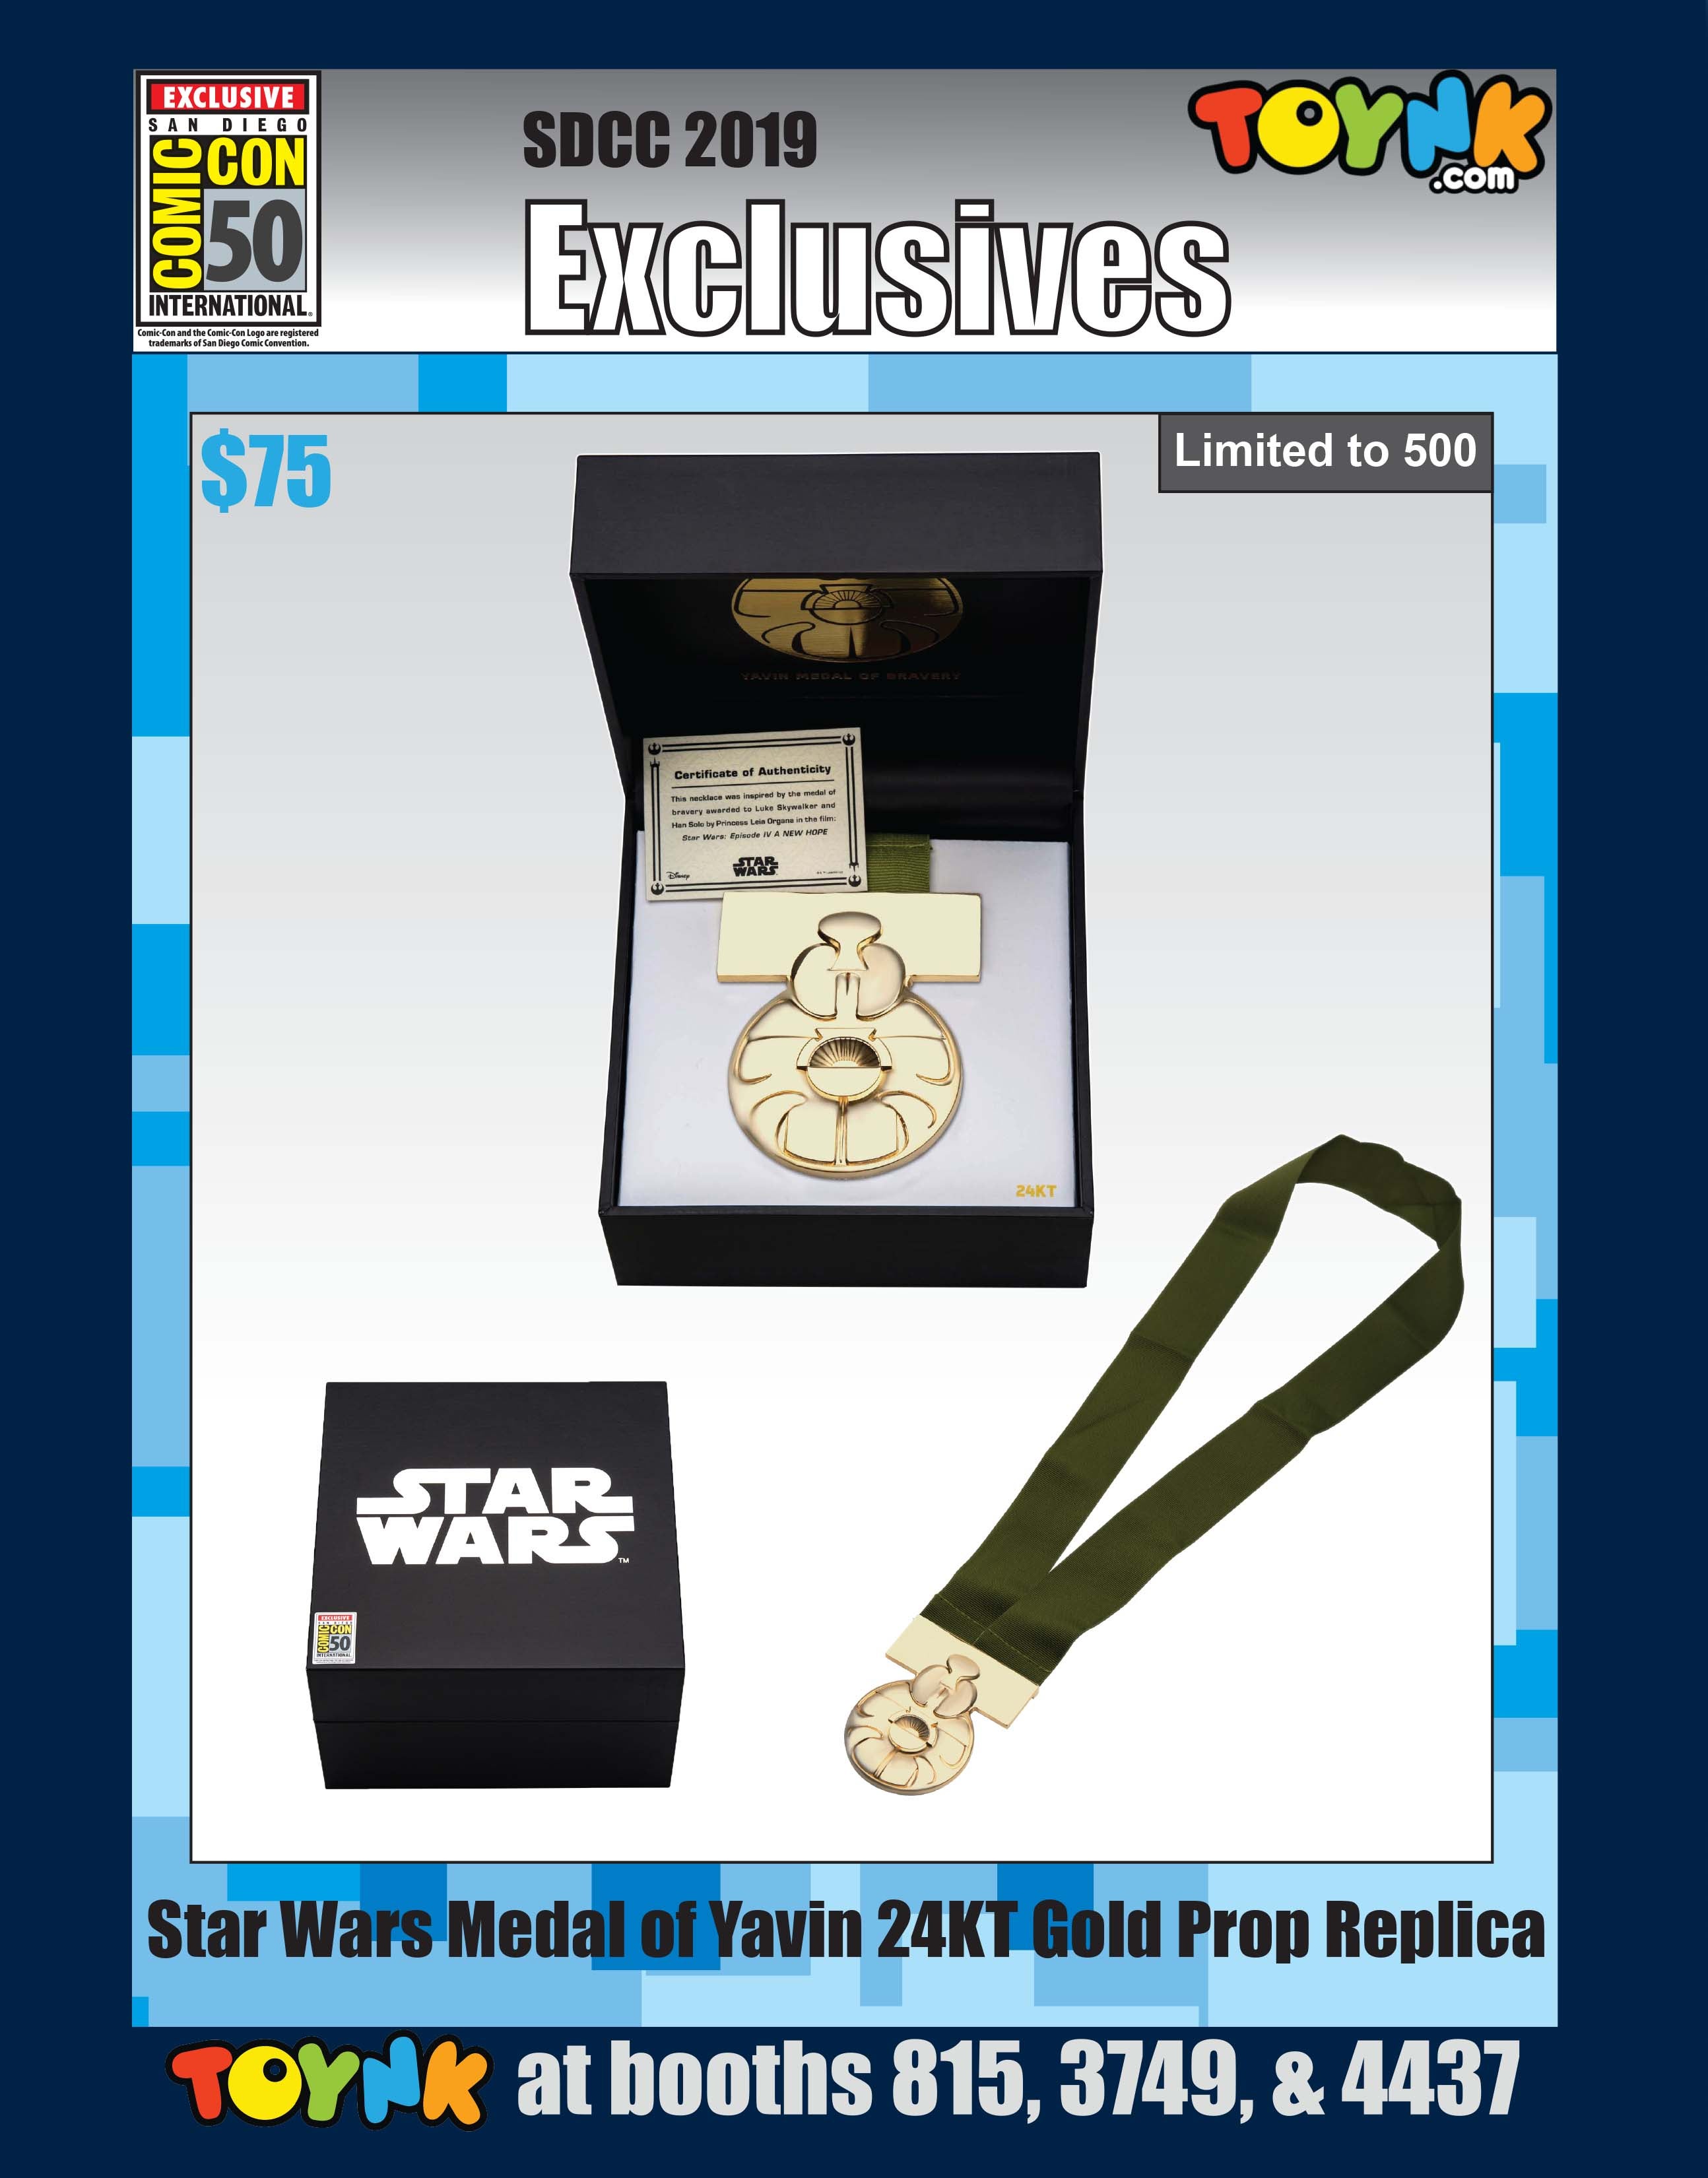 SDCC19 starwars medal of yavin 24kt 1